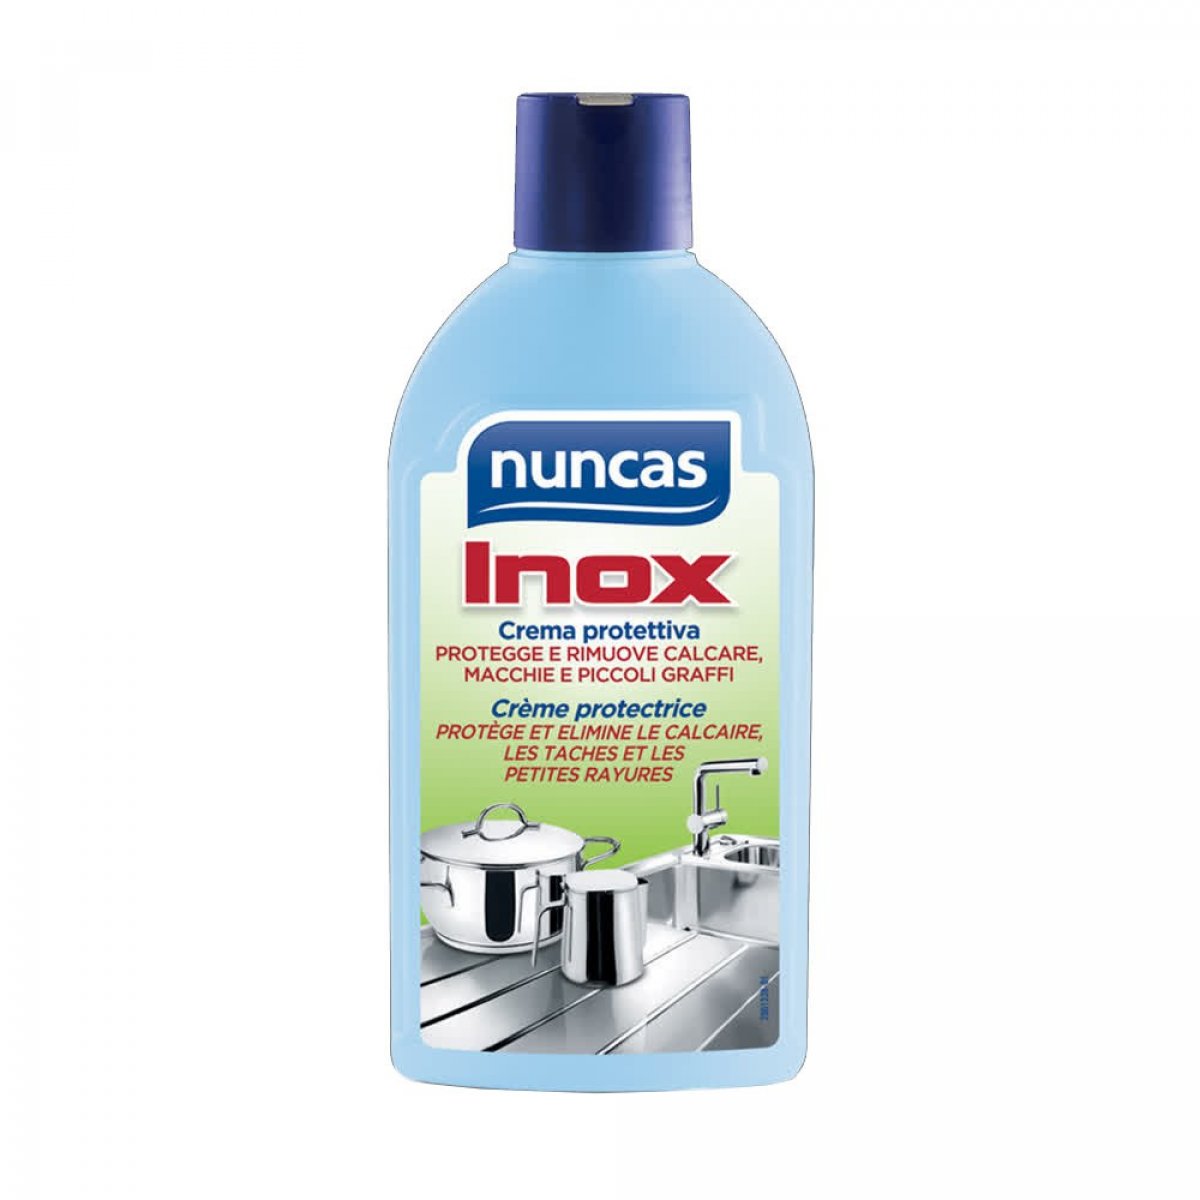 Inox crema protettiva - Nuncas 